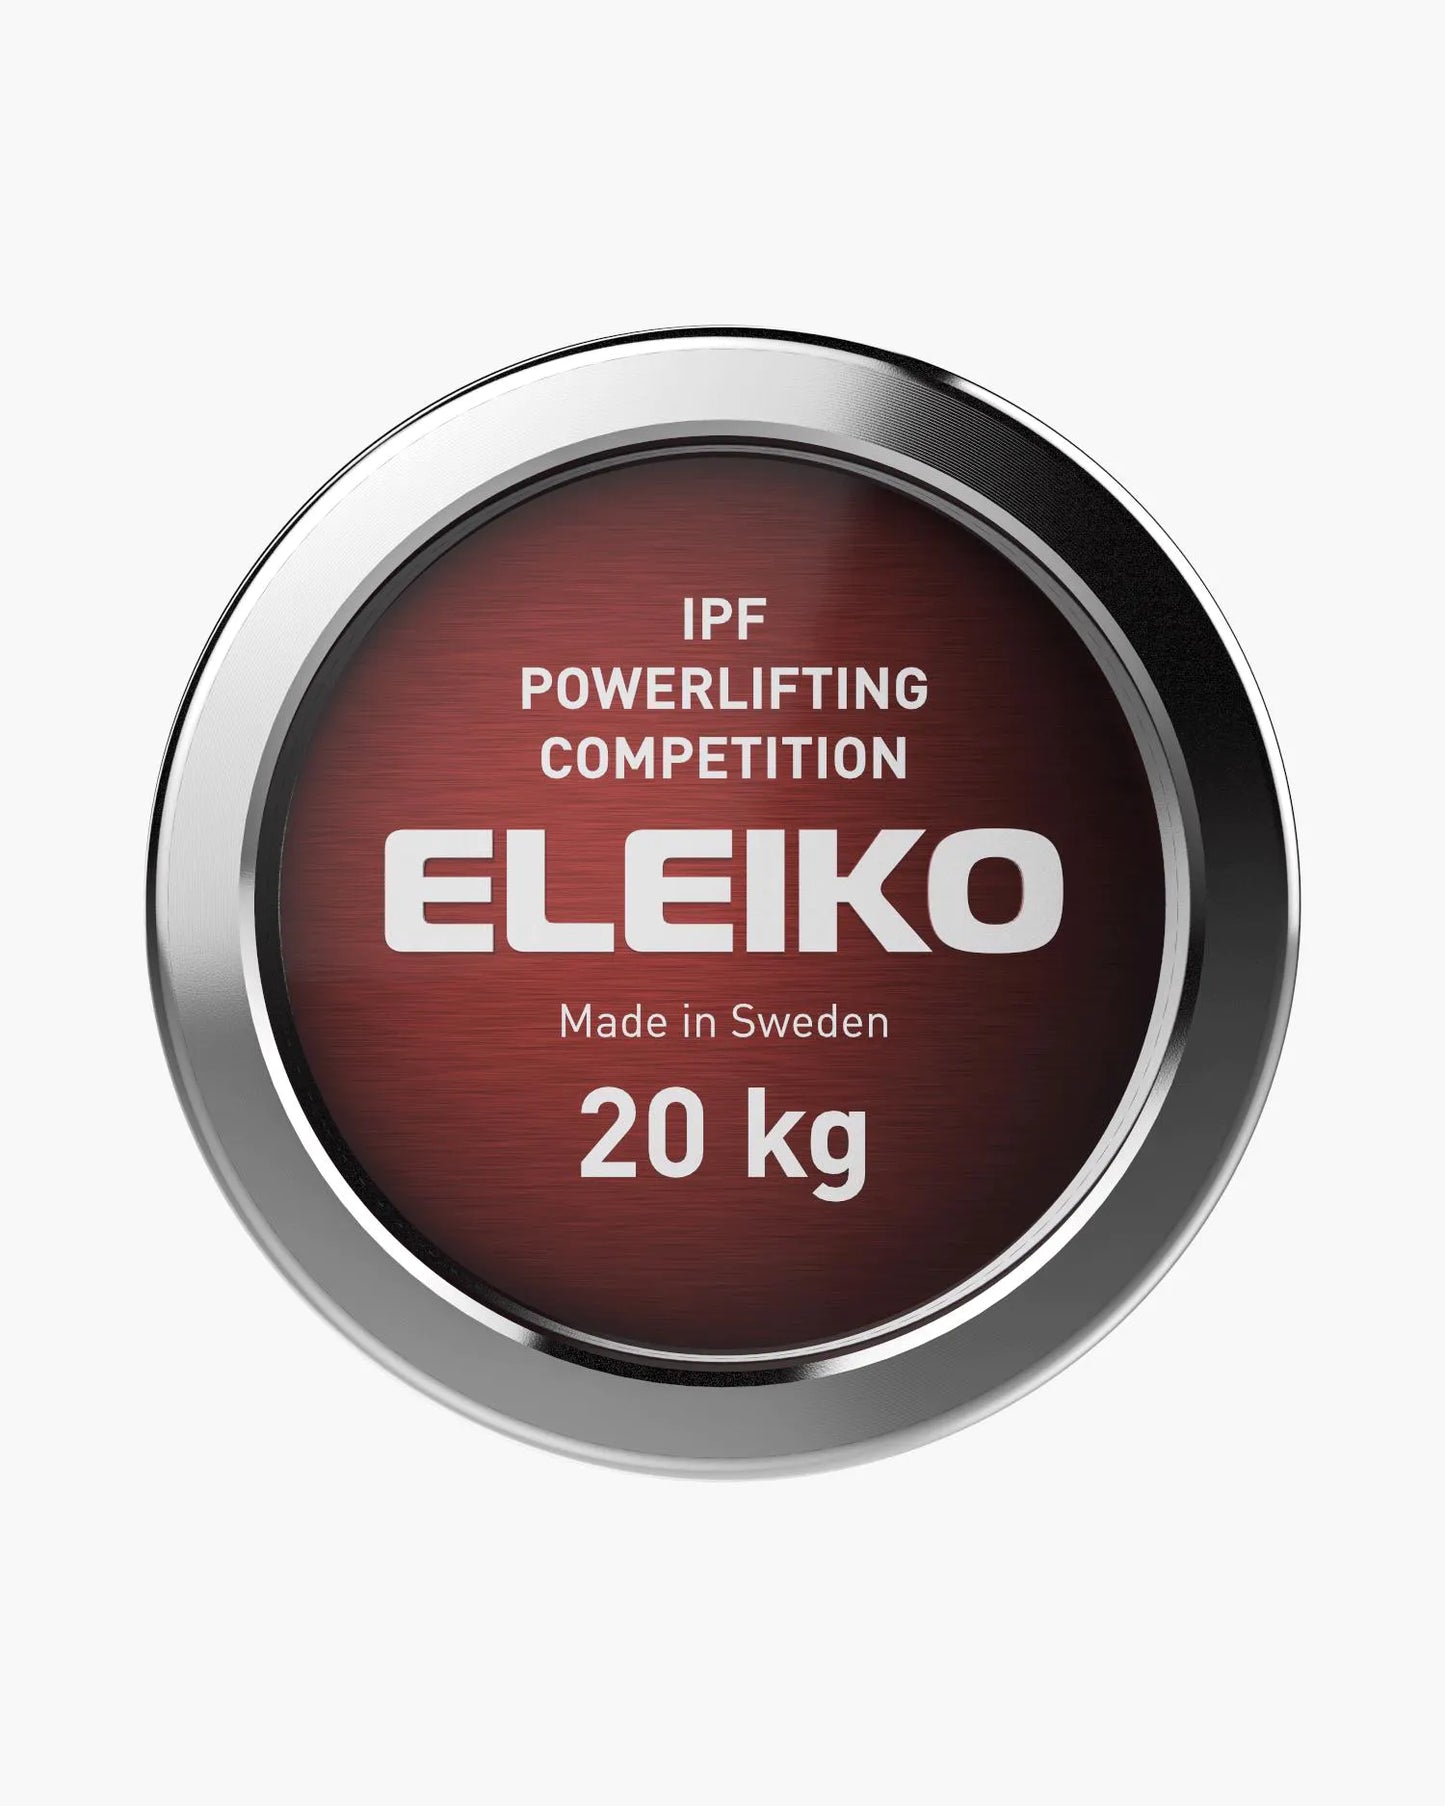 Eleiko IPF Powerlifting Competition Bar - 20 kg